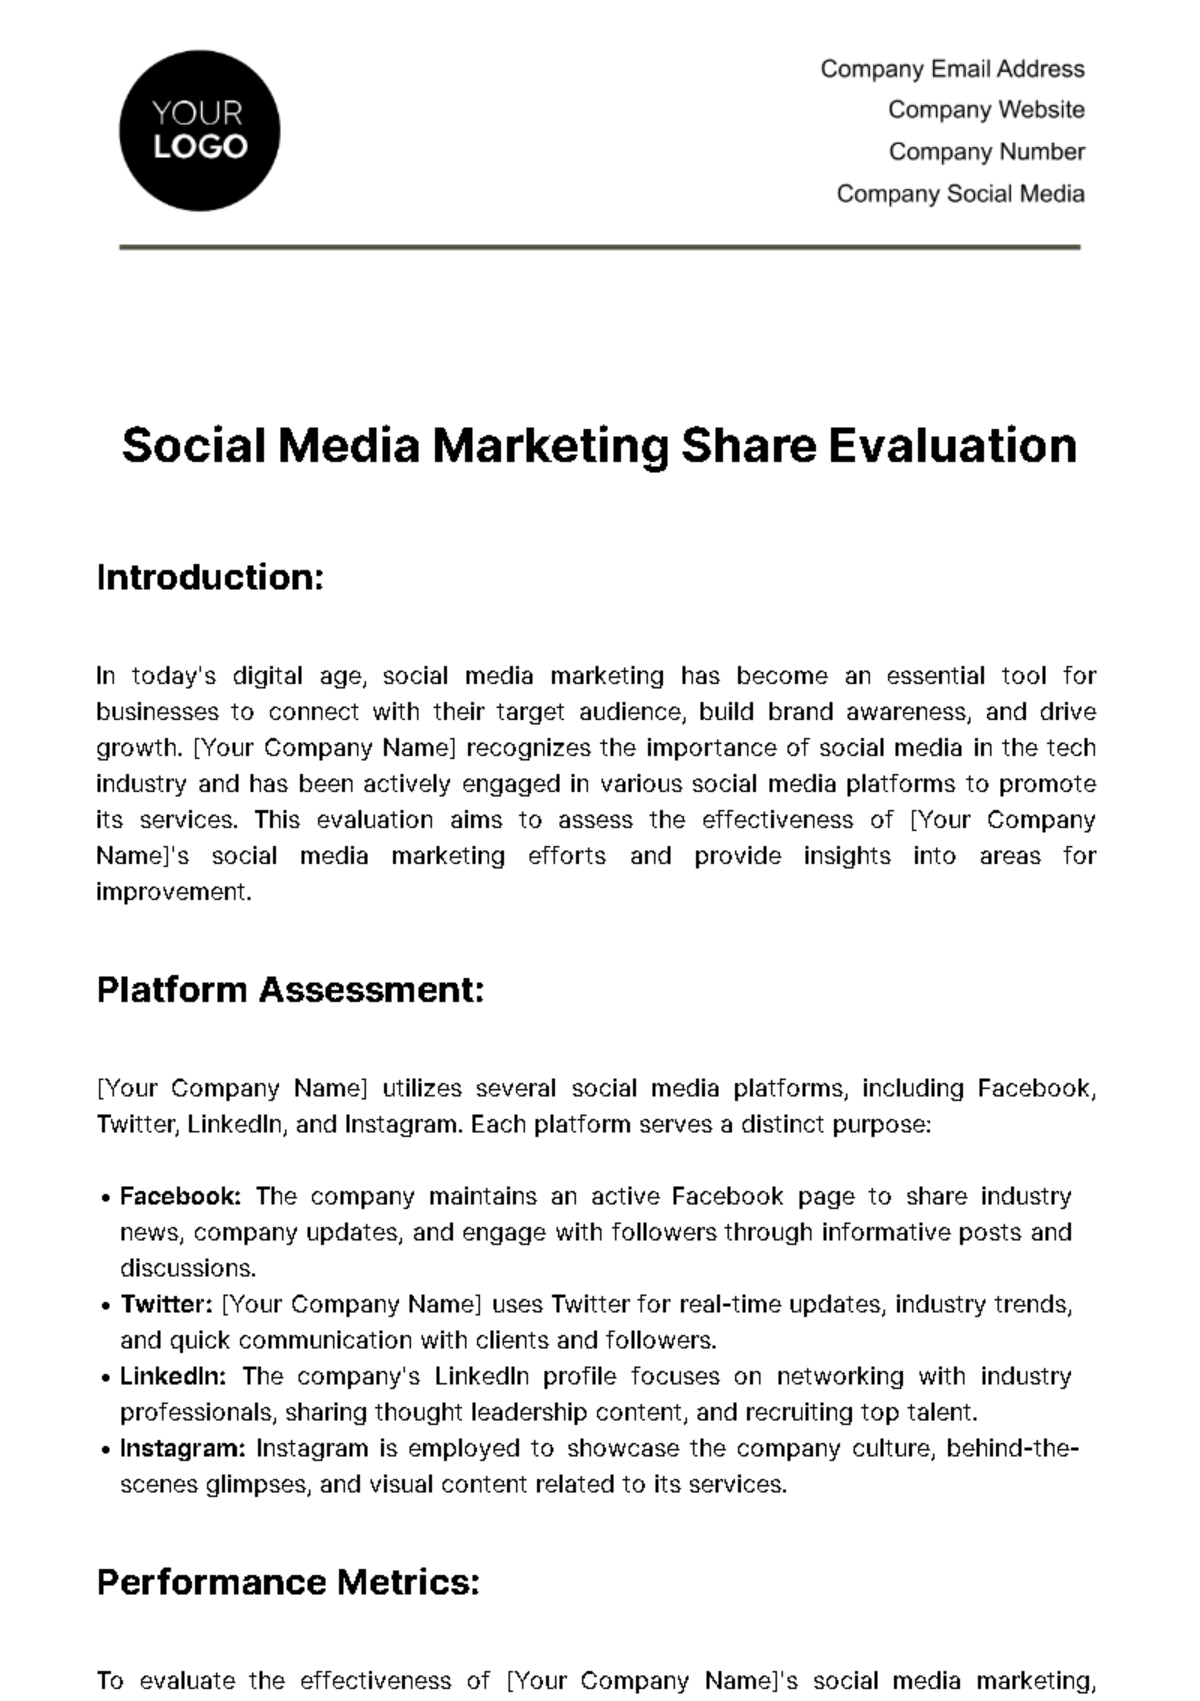 Free Social Media Marketing Share Evaluation Template